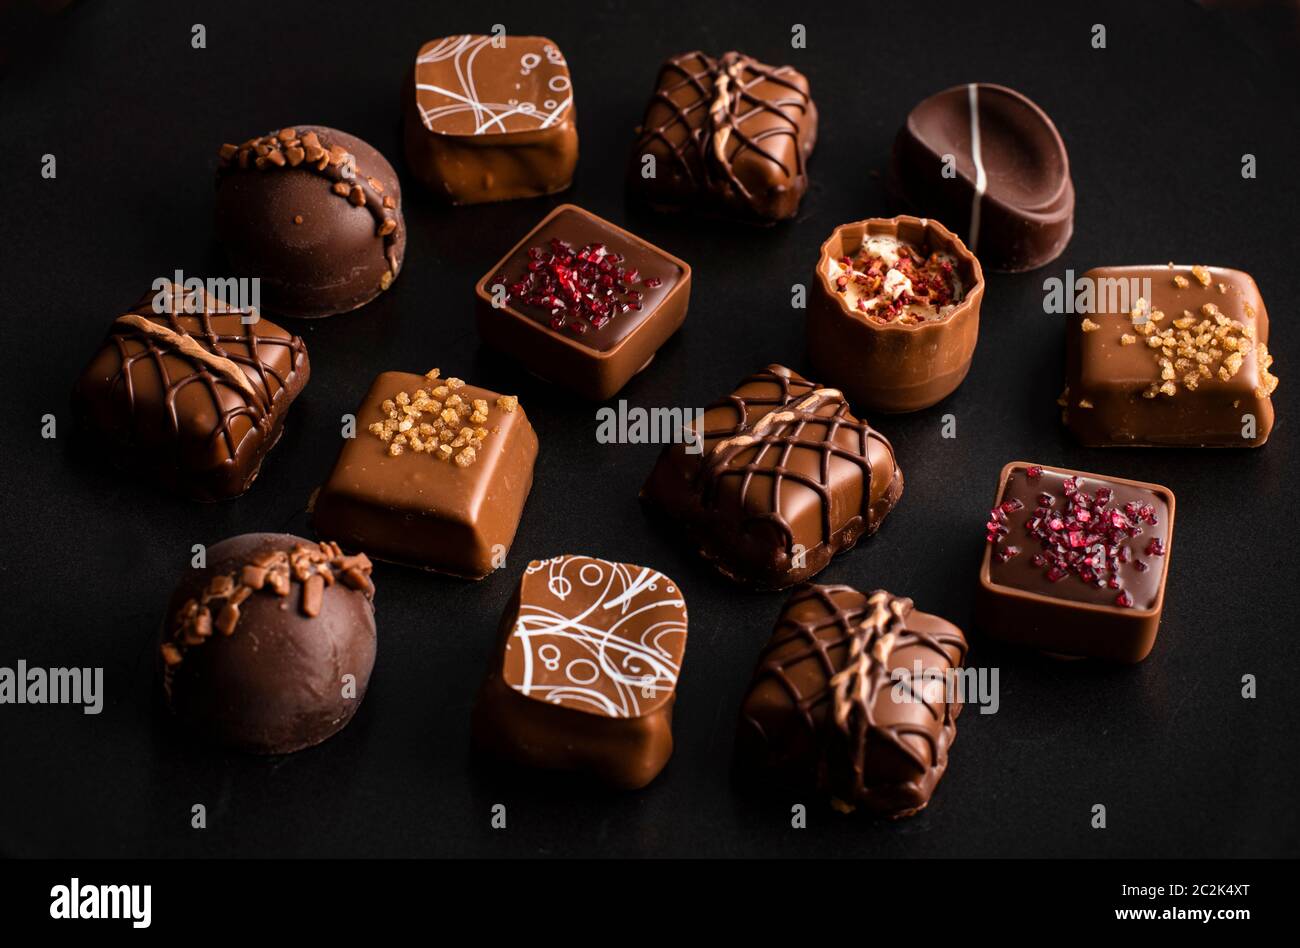 Chocolate assortment on dark background Stock Photo